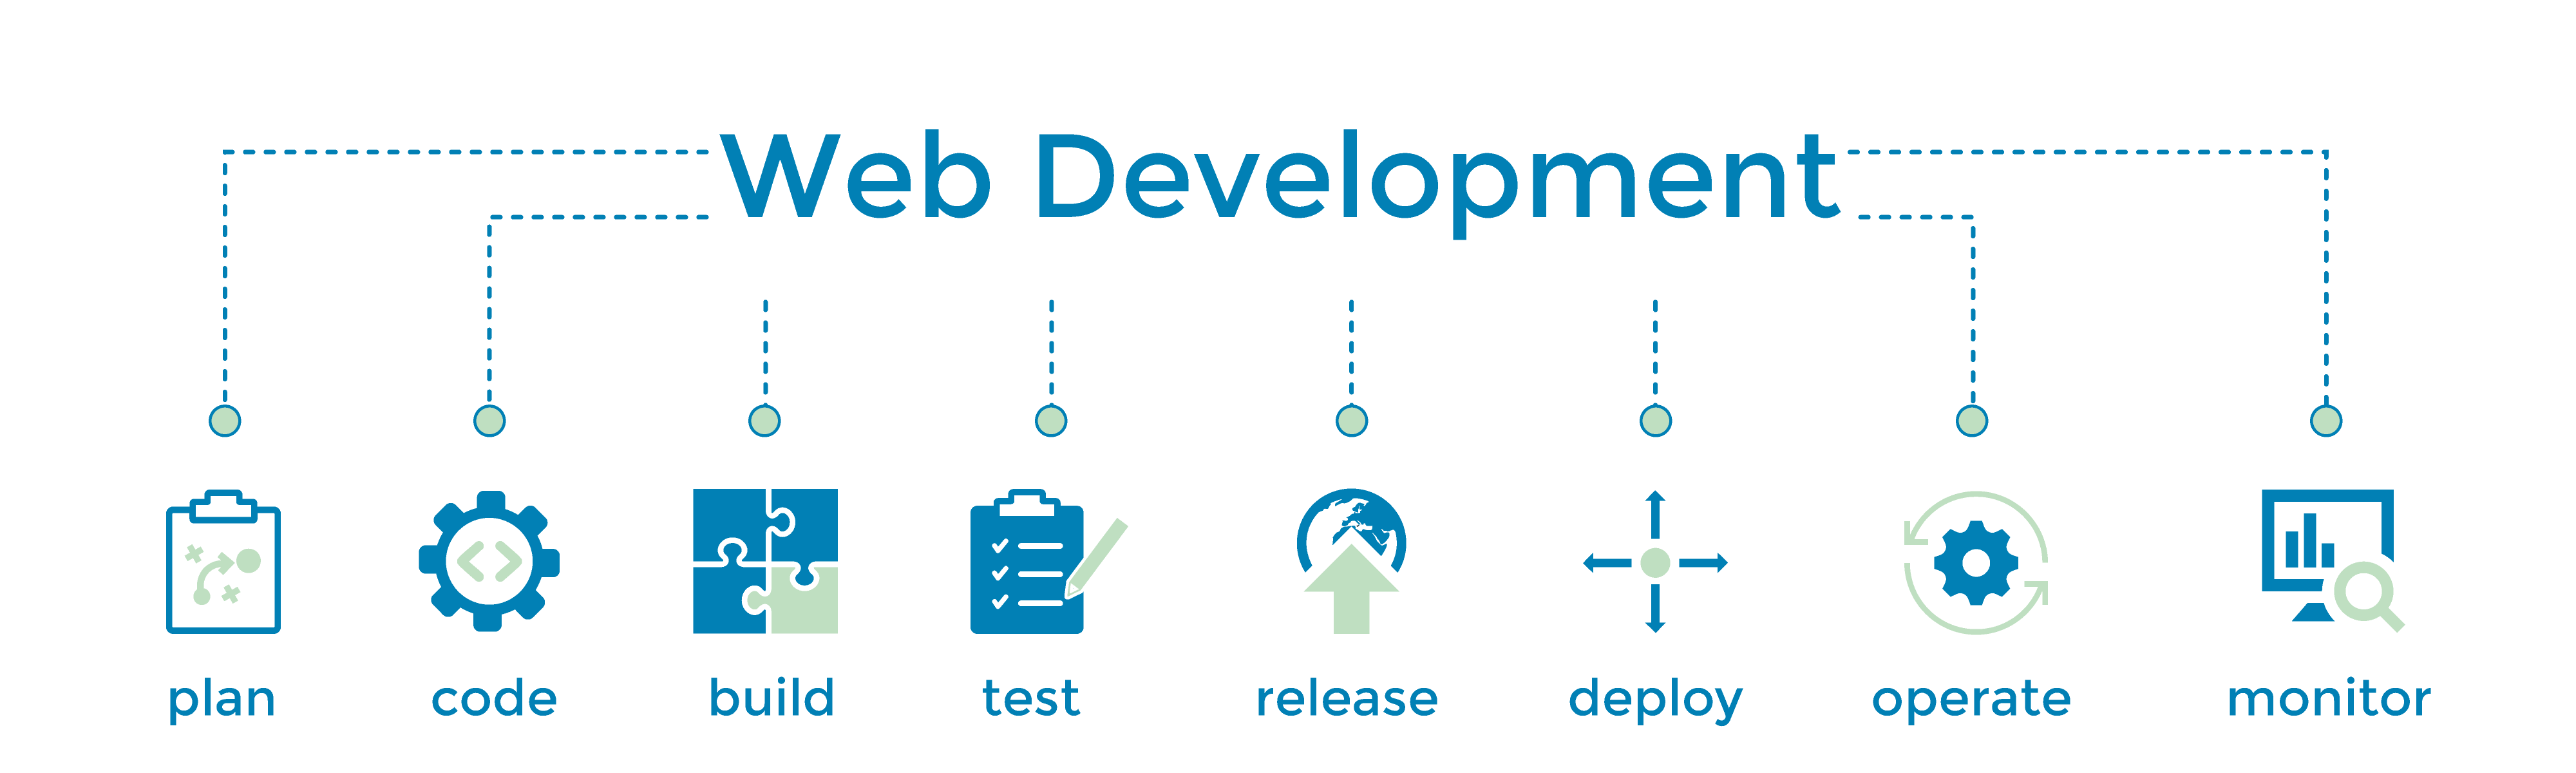 Web Development Chart